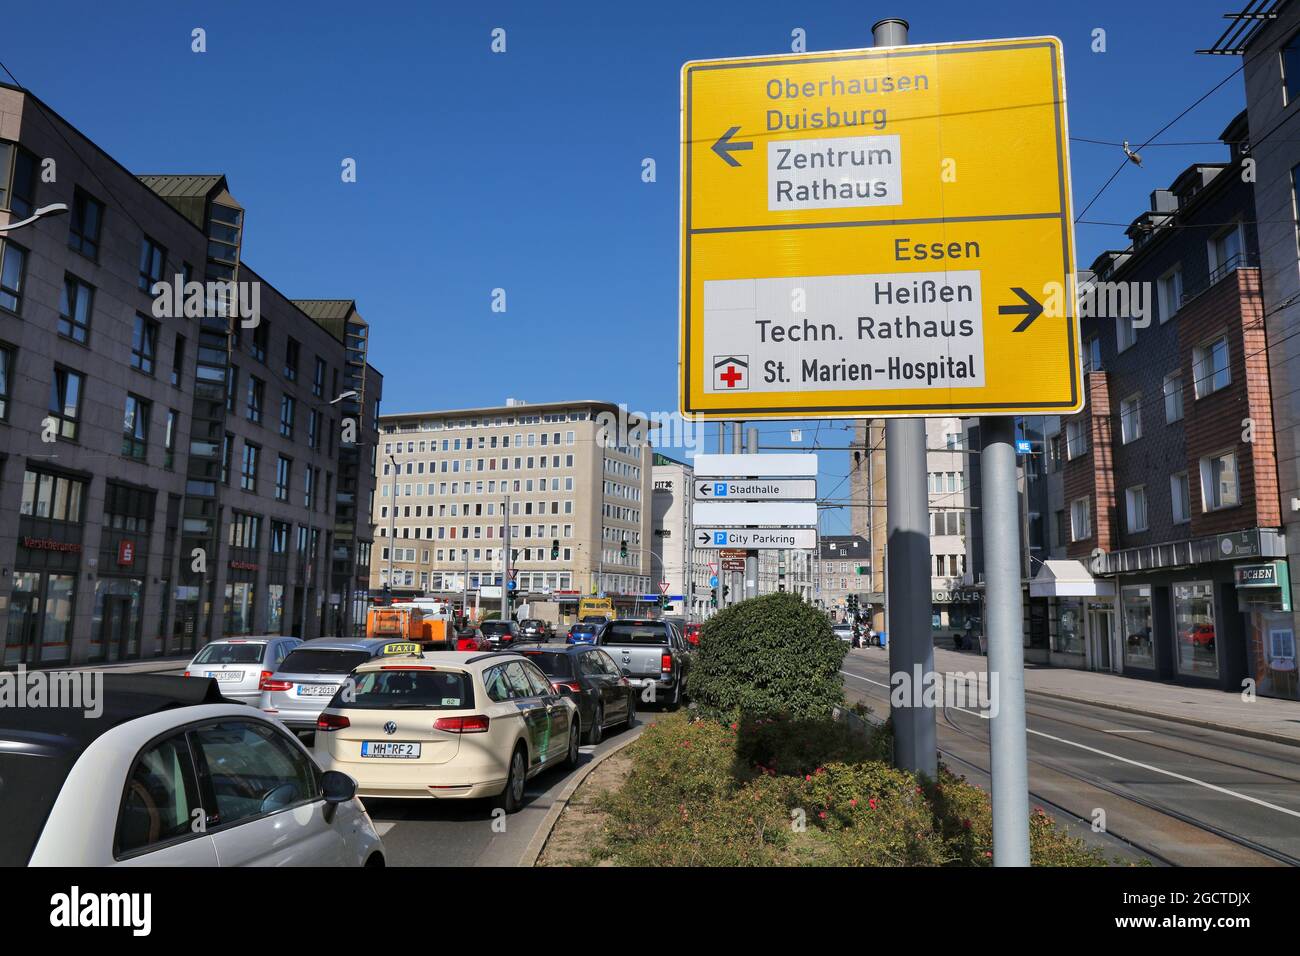 MUELHEIM A.D. RUHR, GERMANY - SEPTEMBER 21, 2020: Car traffic in downtown Muelheim An Der Ruhr, a major city in the state of North Rhine-Westphalia. D Stock Photo